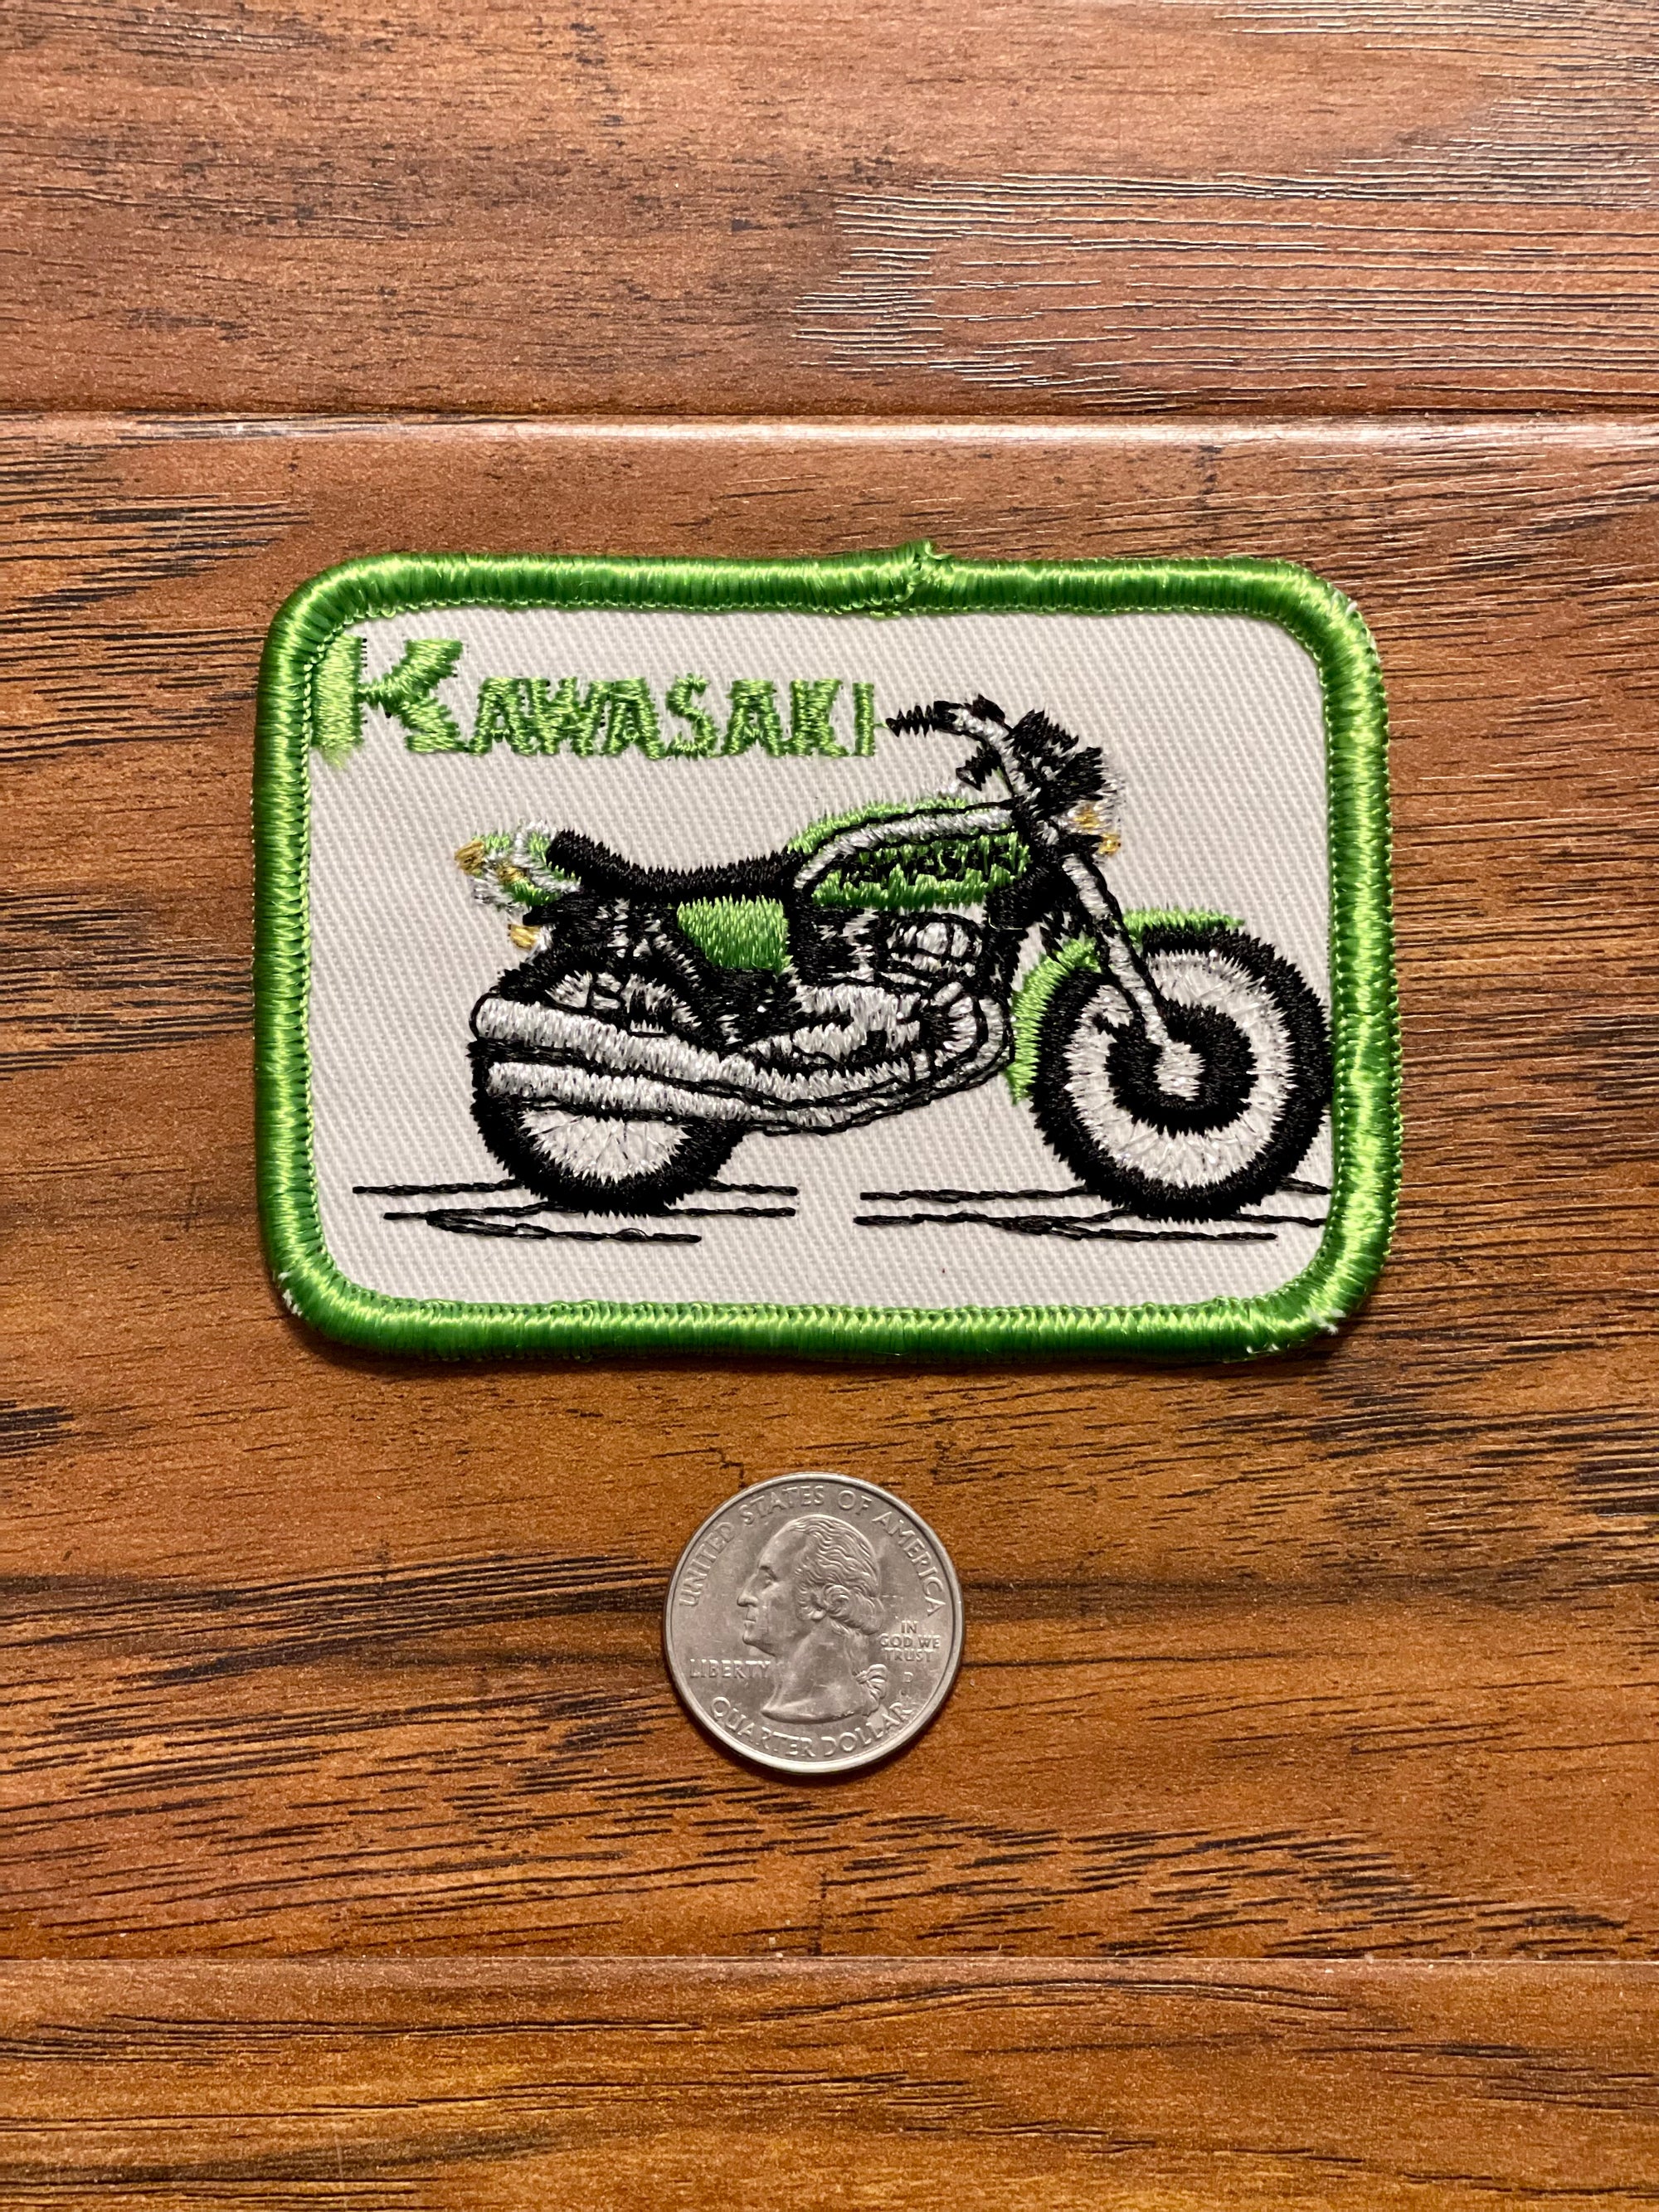 Vintage Kawasaki